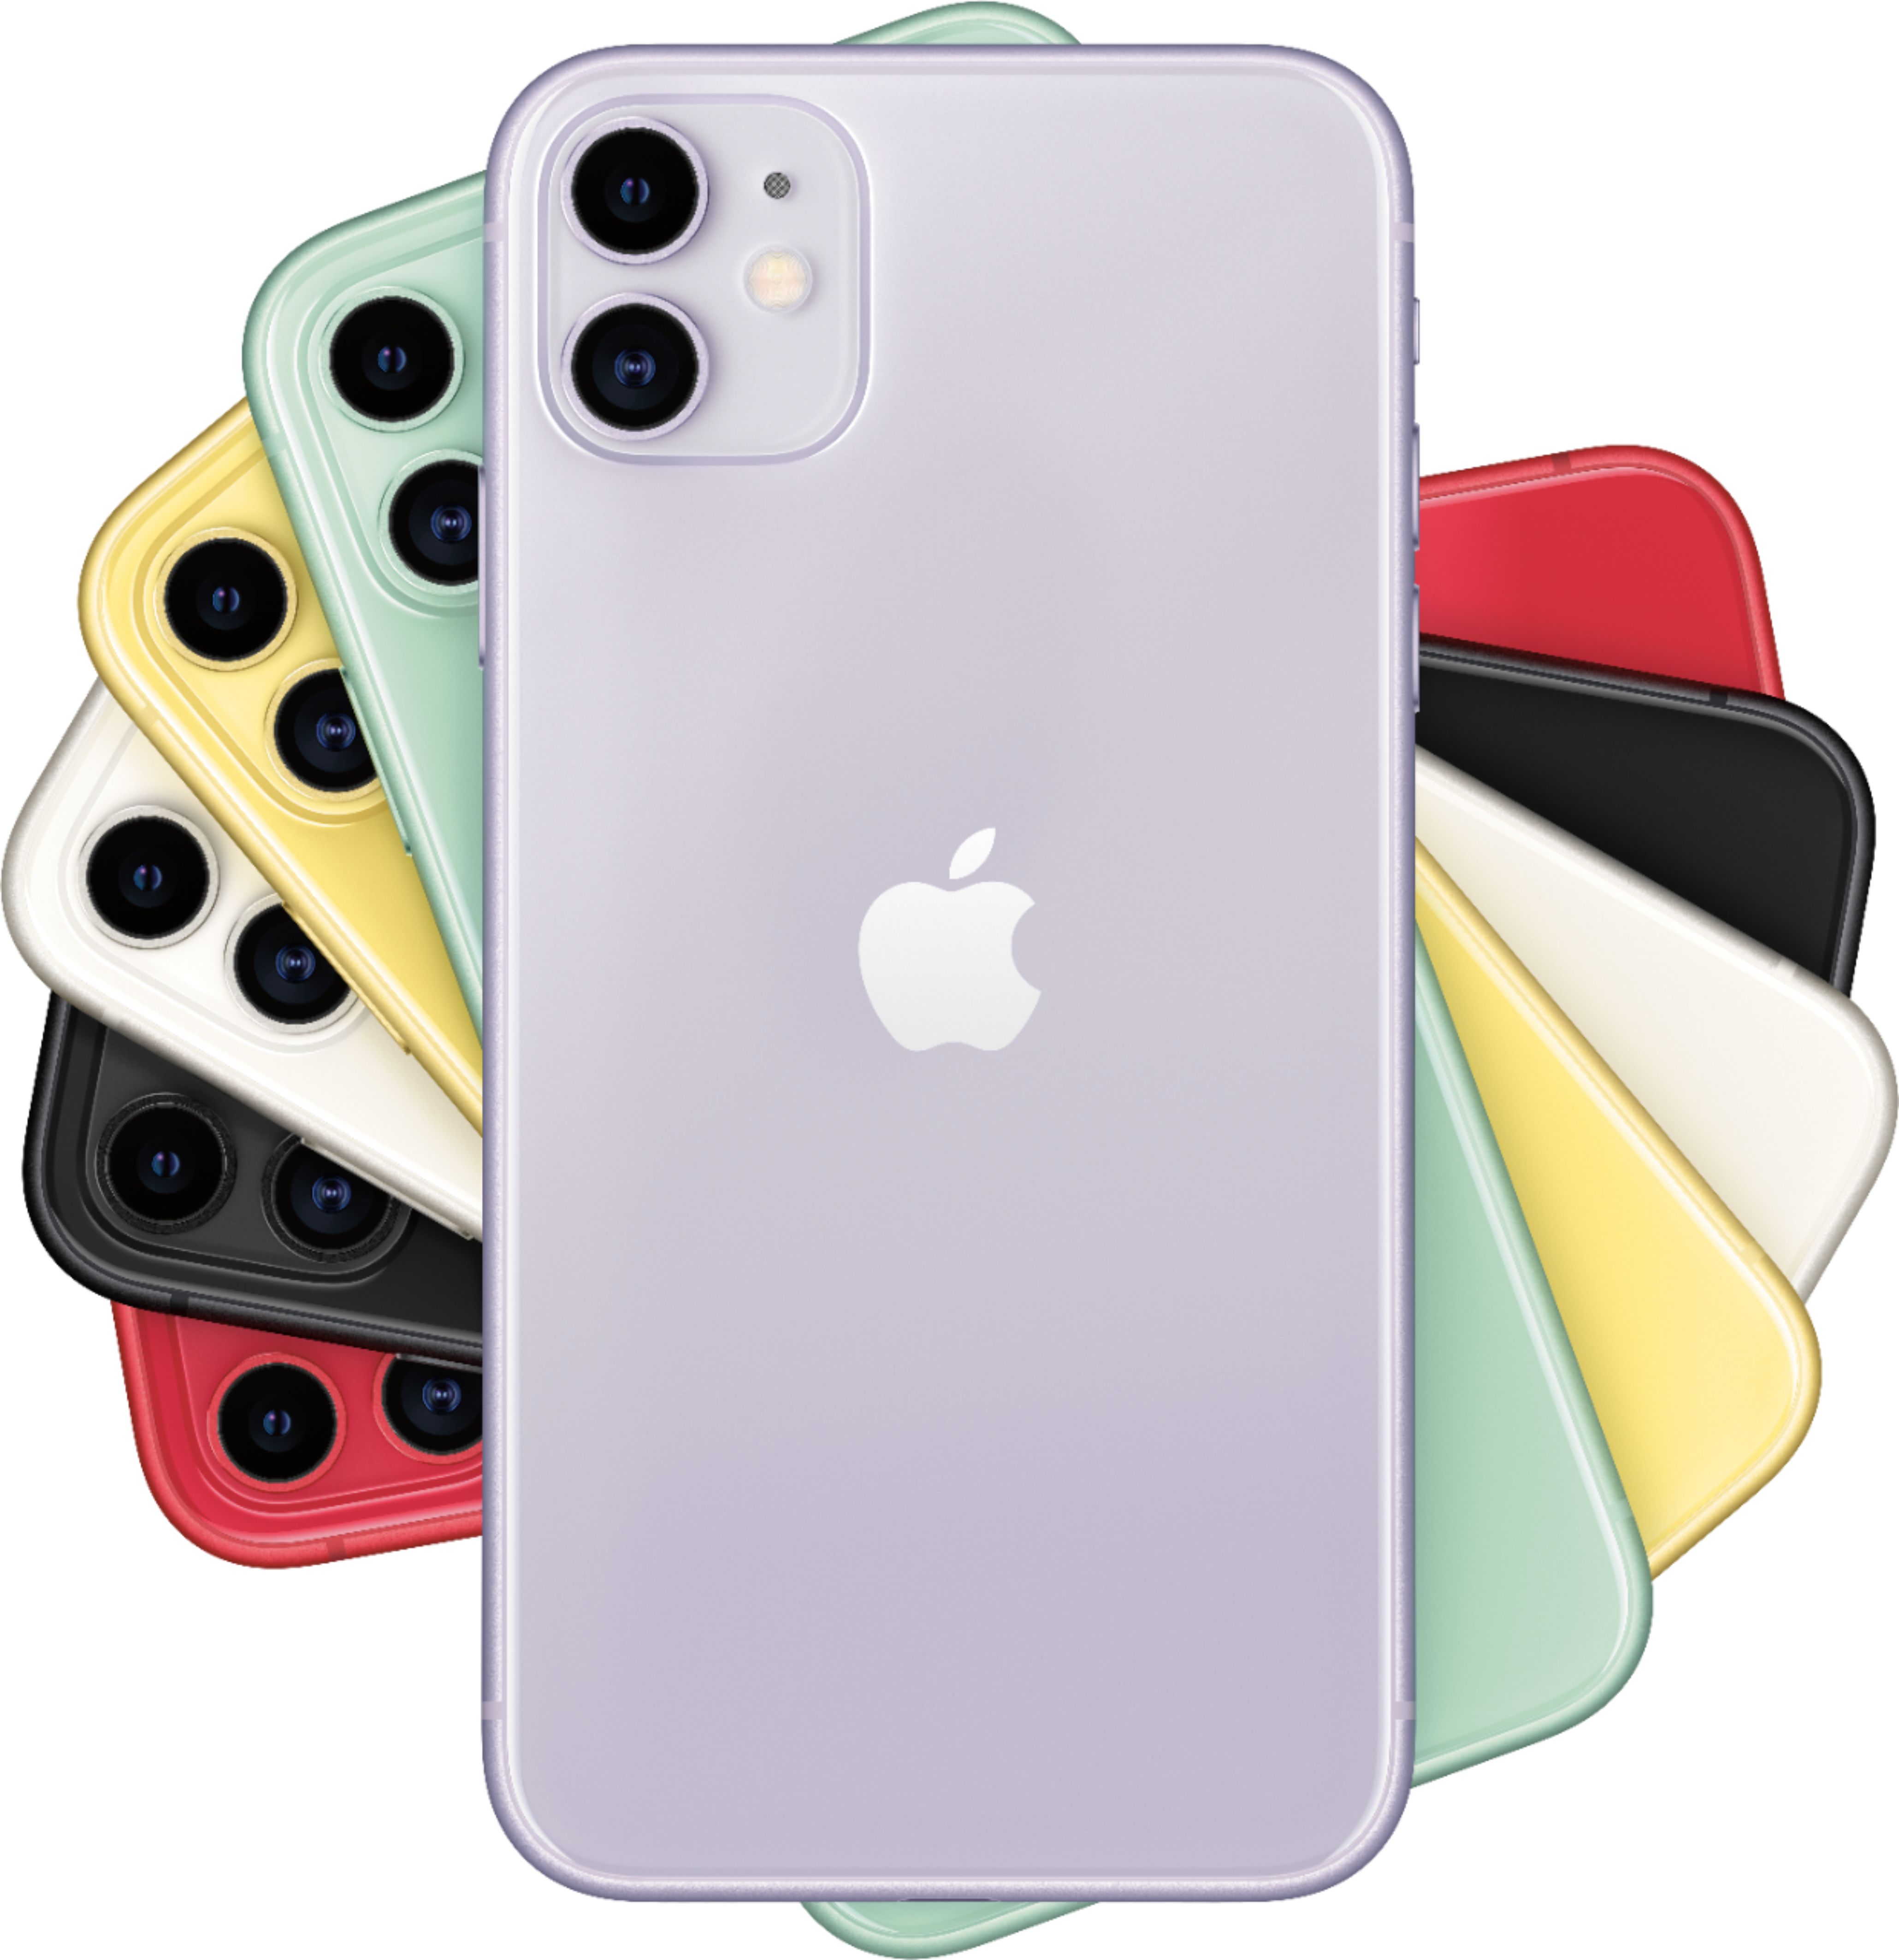 Apple iPhone 11 64GB Purple (Verizon) MWLC2LL/A - Best Buy